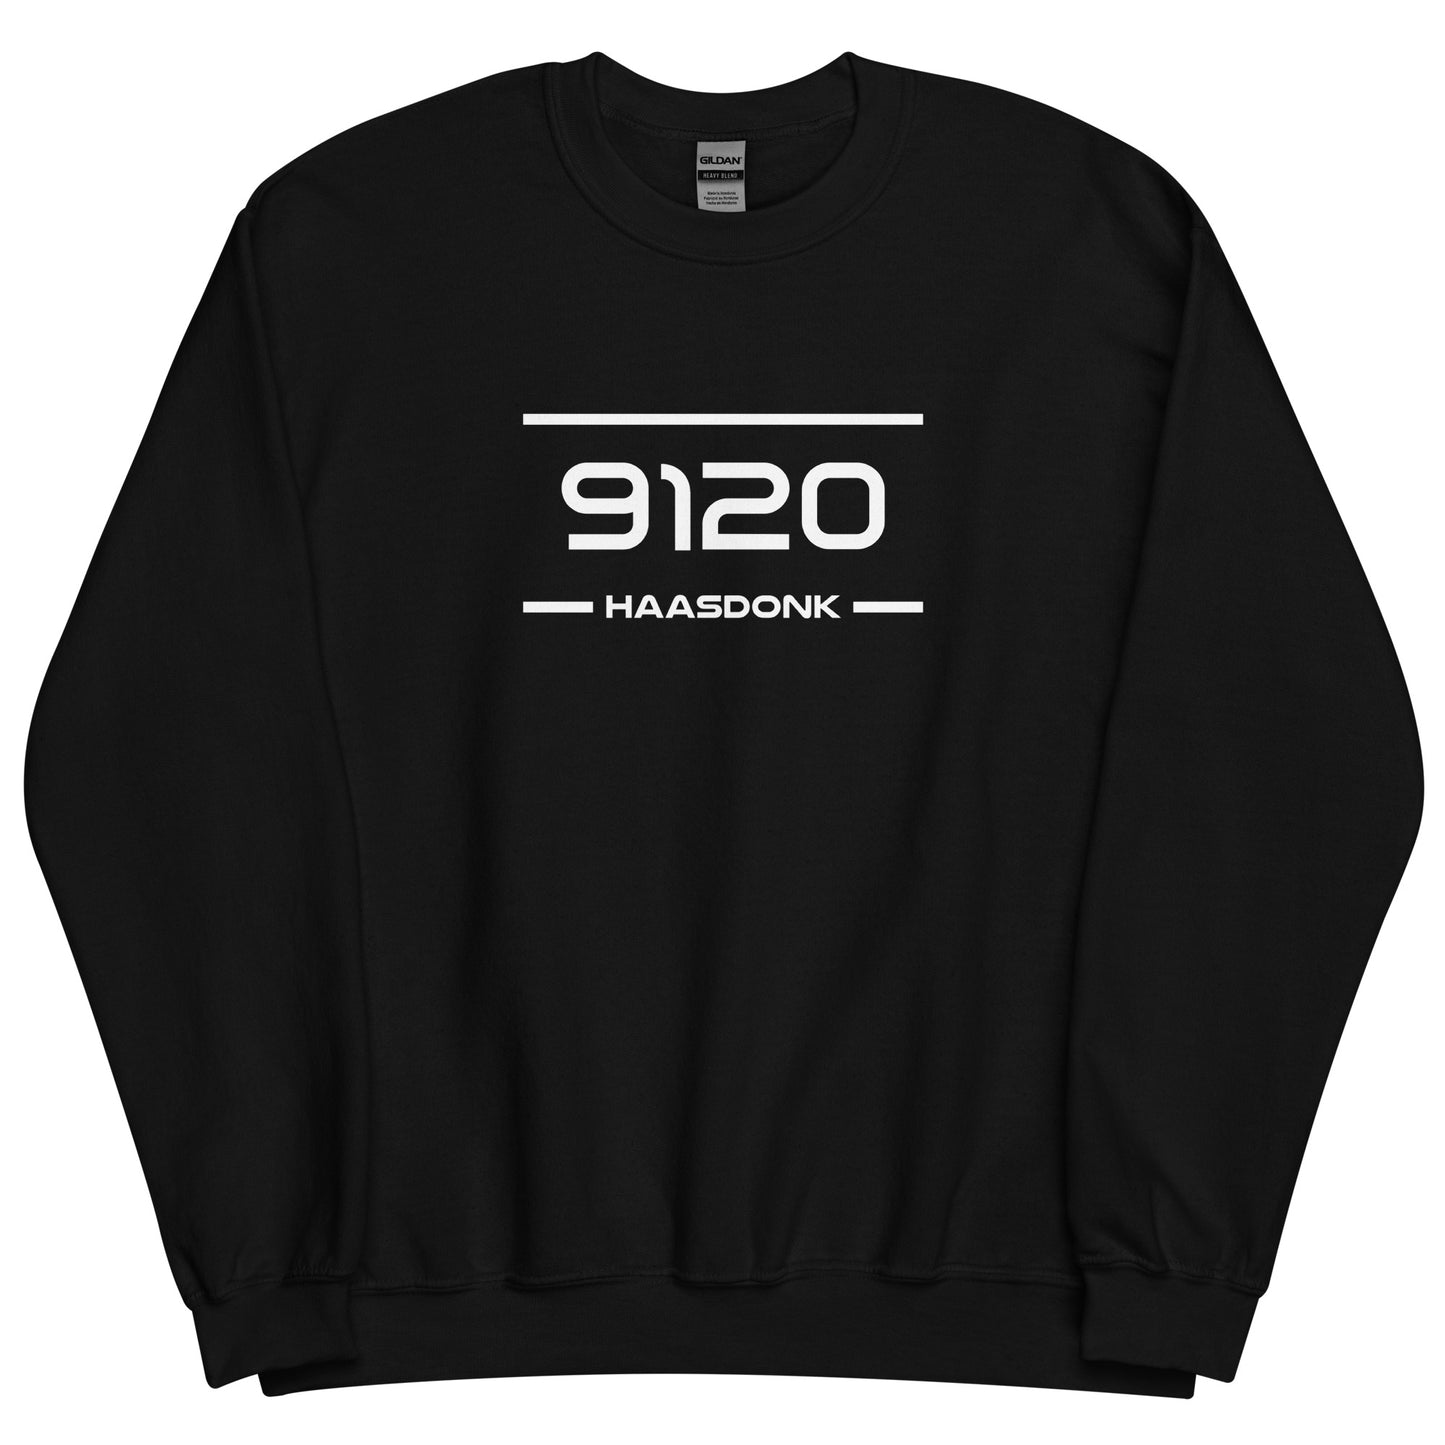 Sweater - 9120 - Haasdonk (M/V)